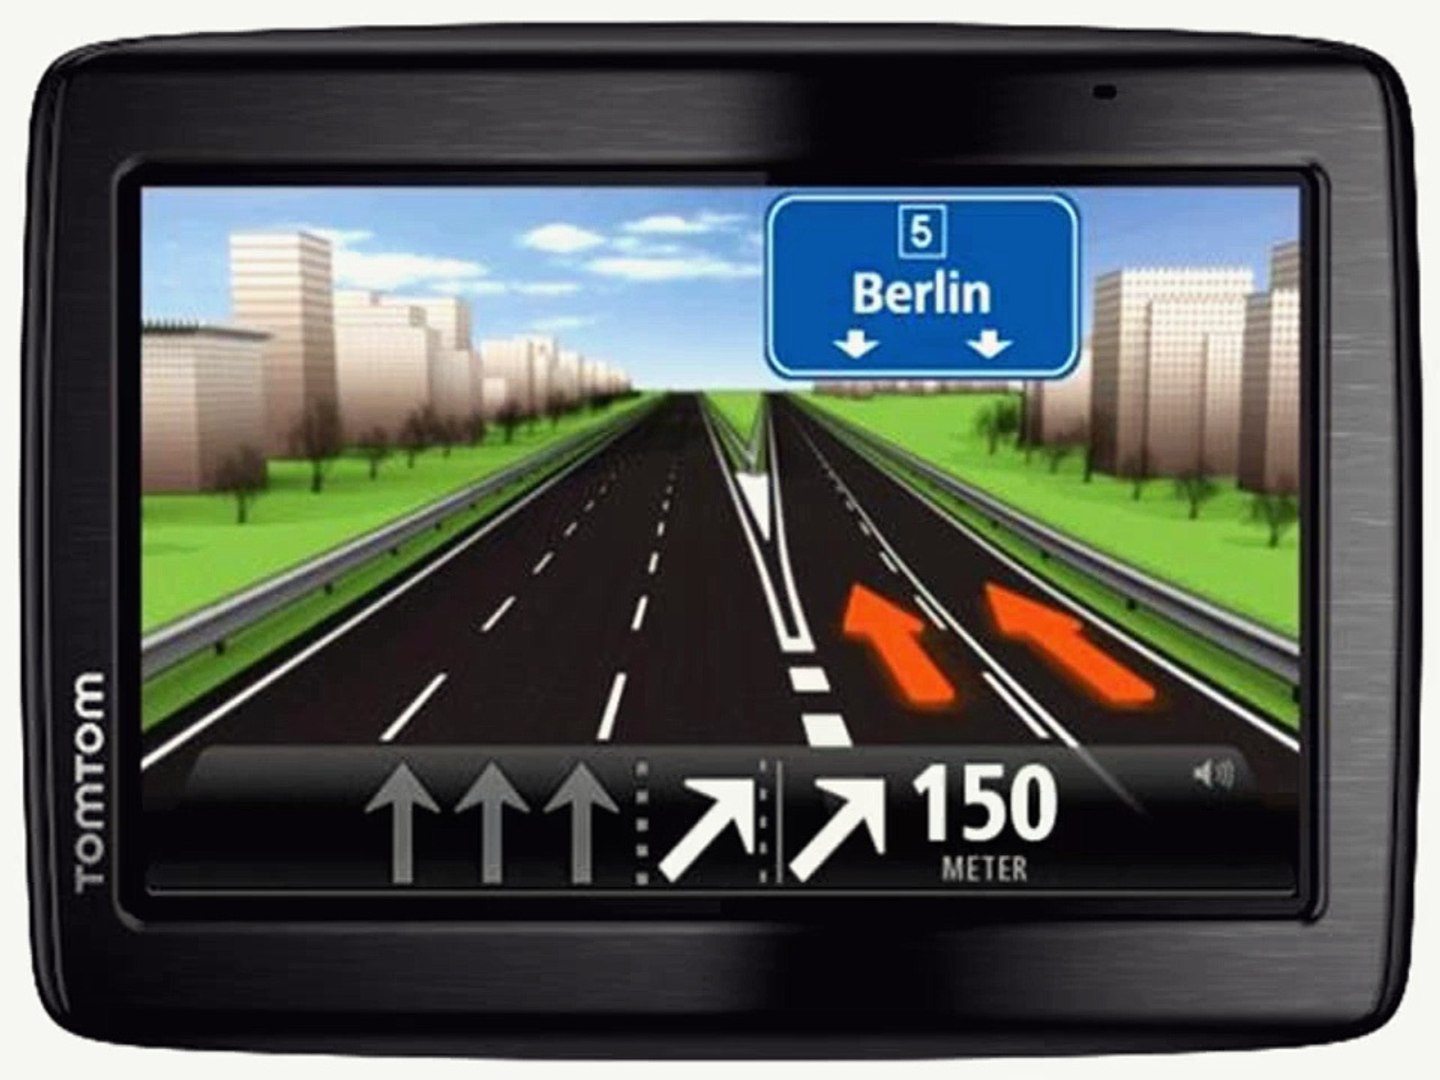 Touchscreen, SD-Kartenslot, USB 4,3 Zentraleuropa Kartenmaterial 10,9cm  Garmin zumo 340LM Motorrad Navi Navigationsgeräte Auto & Motorrad irsa.sk